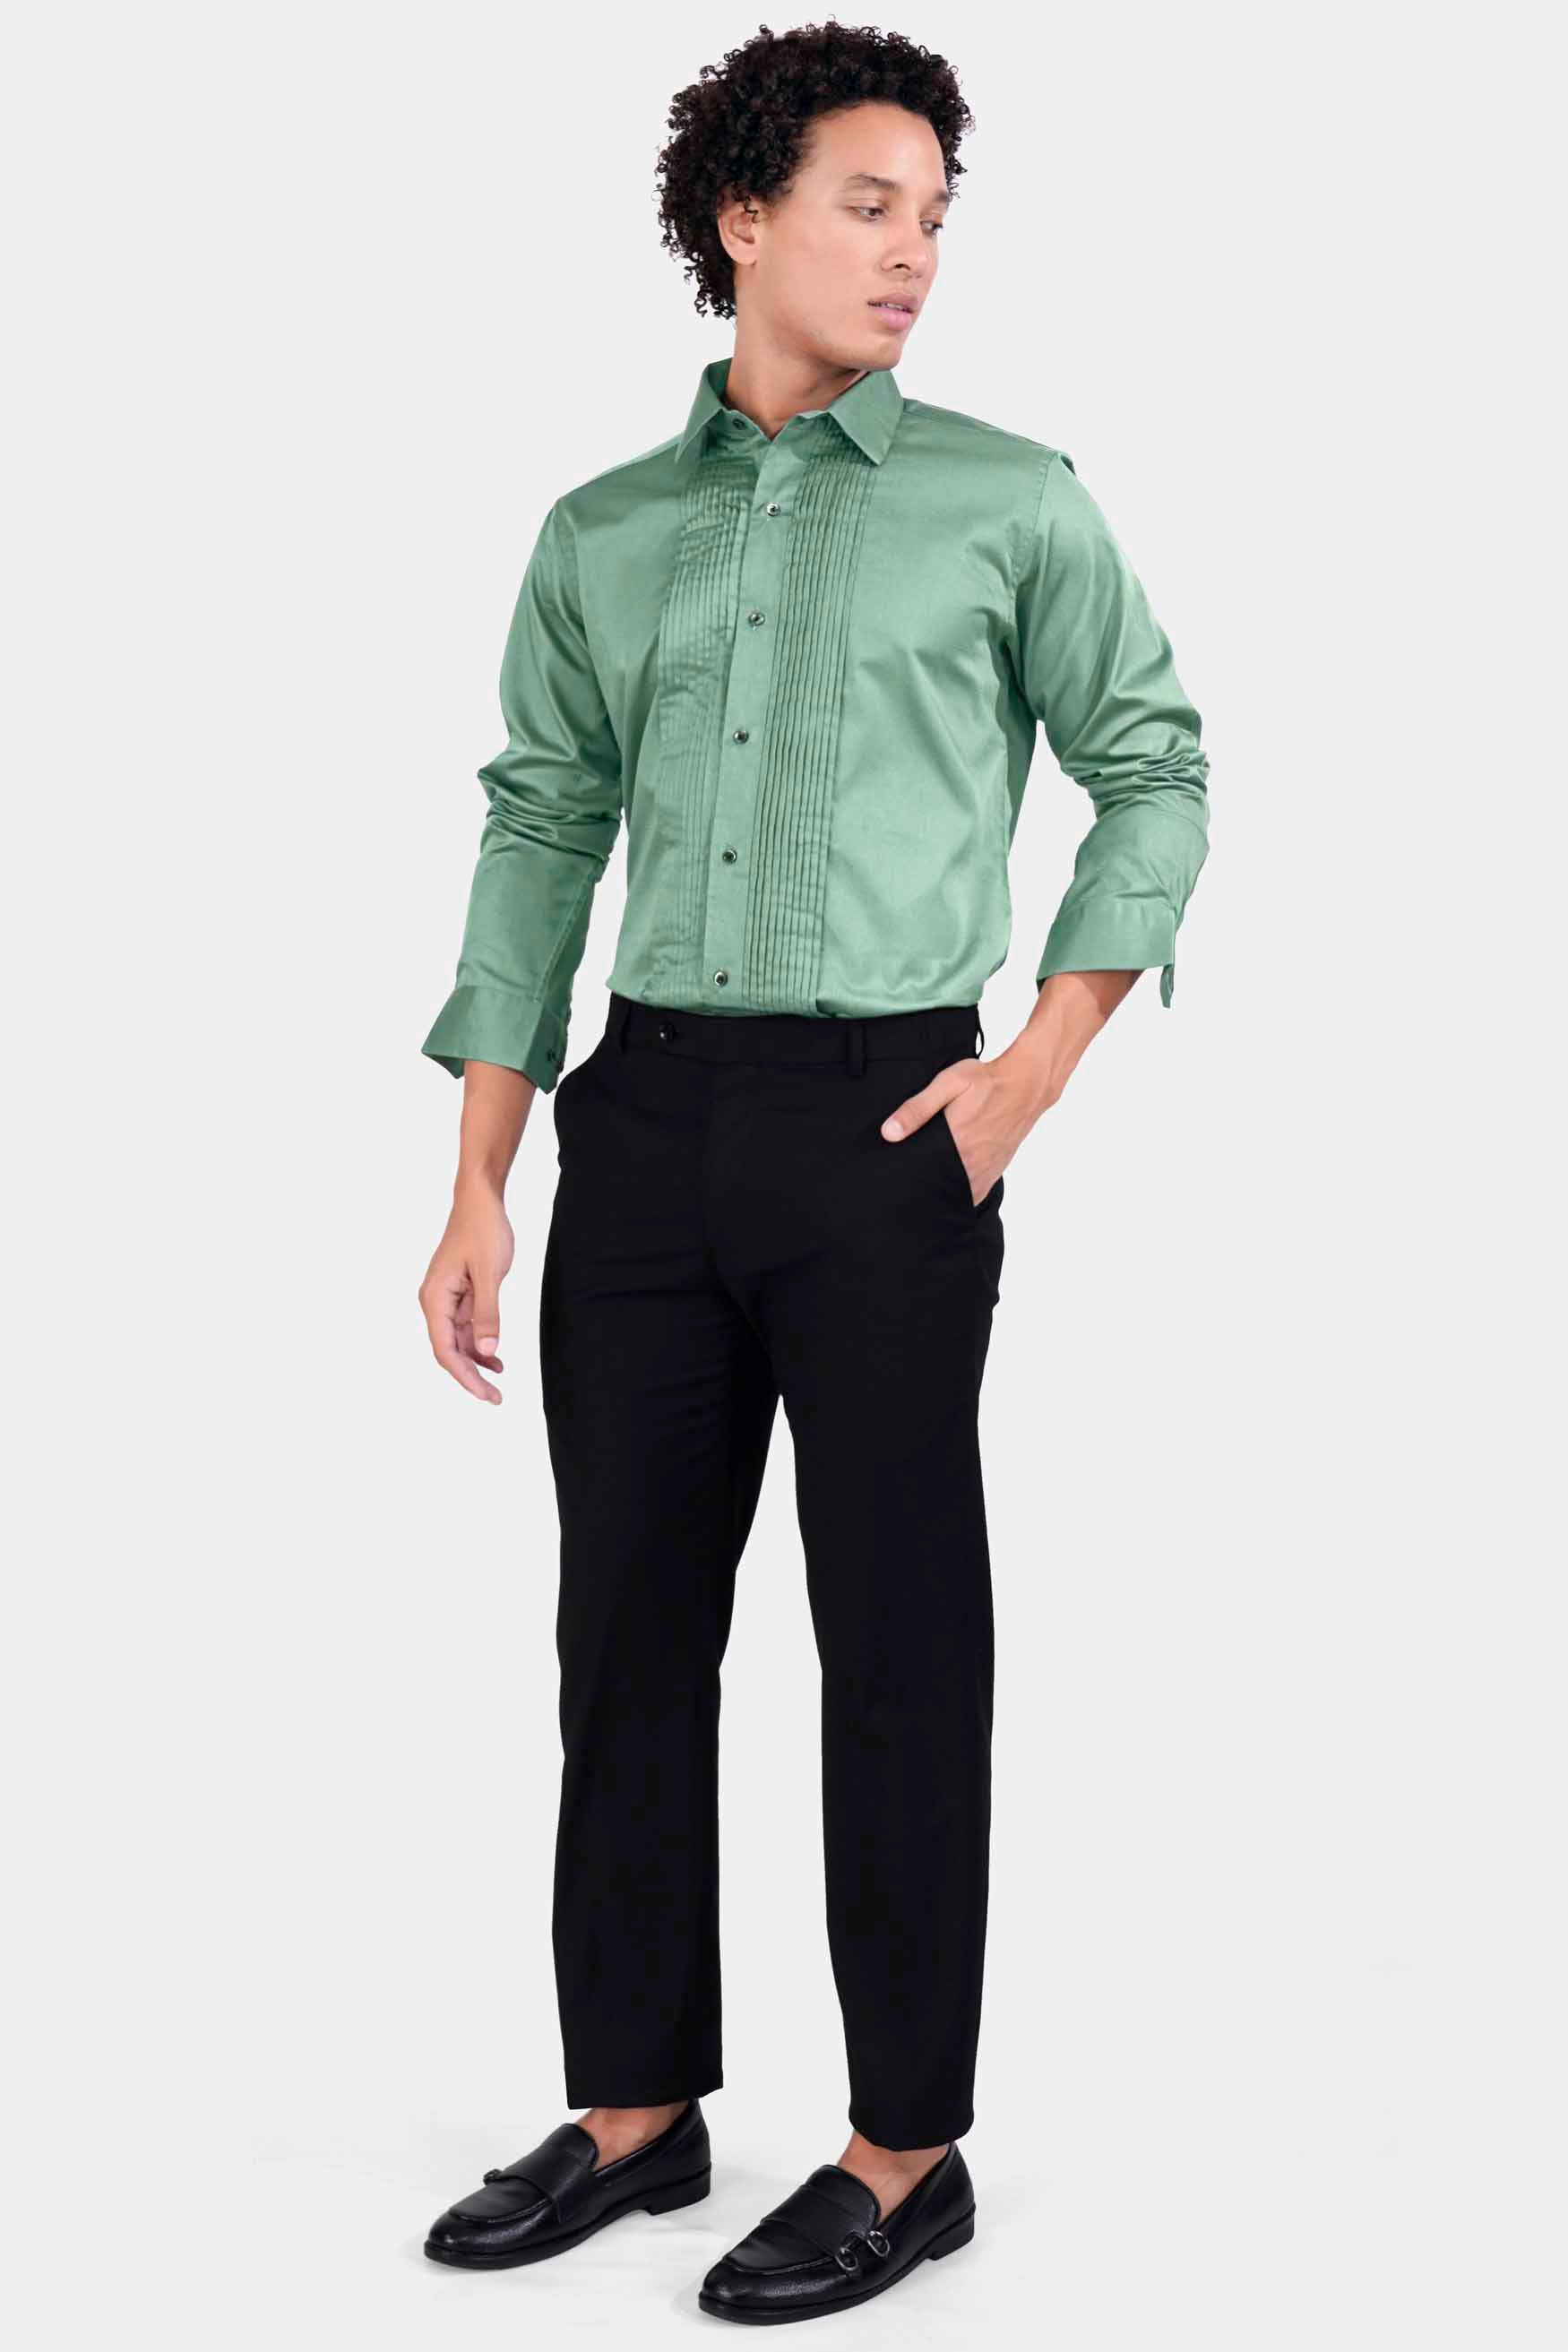 Oxley Green Subtle Sheen Super Soft Premium Cotton Tuxedo Shirt